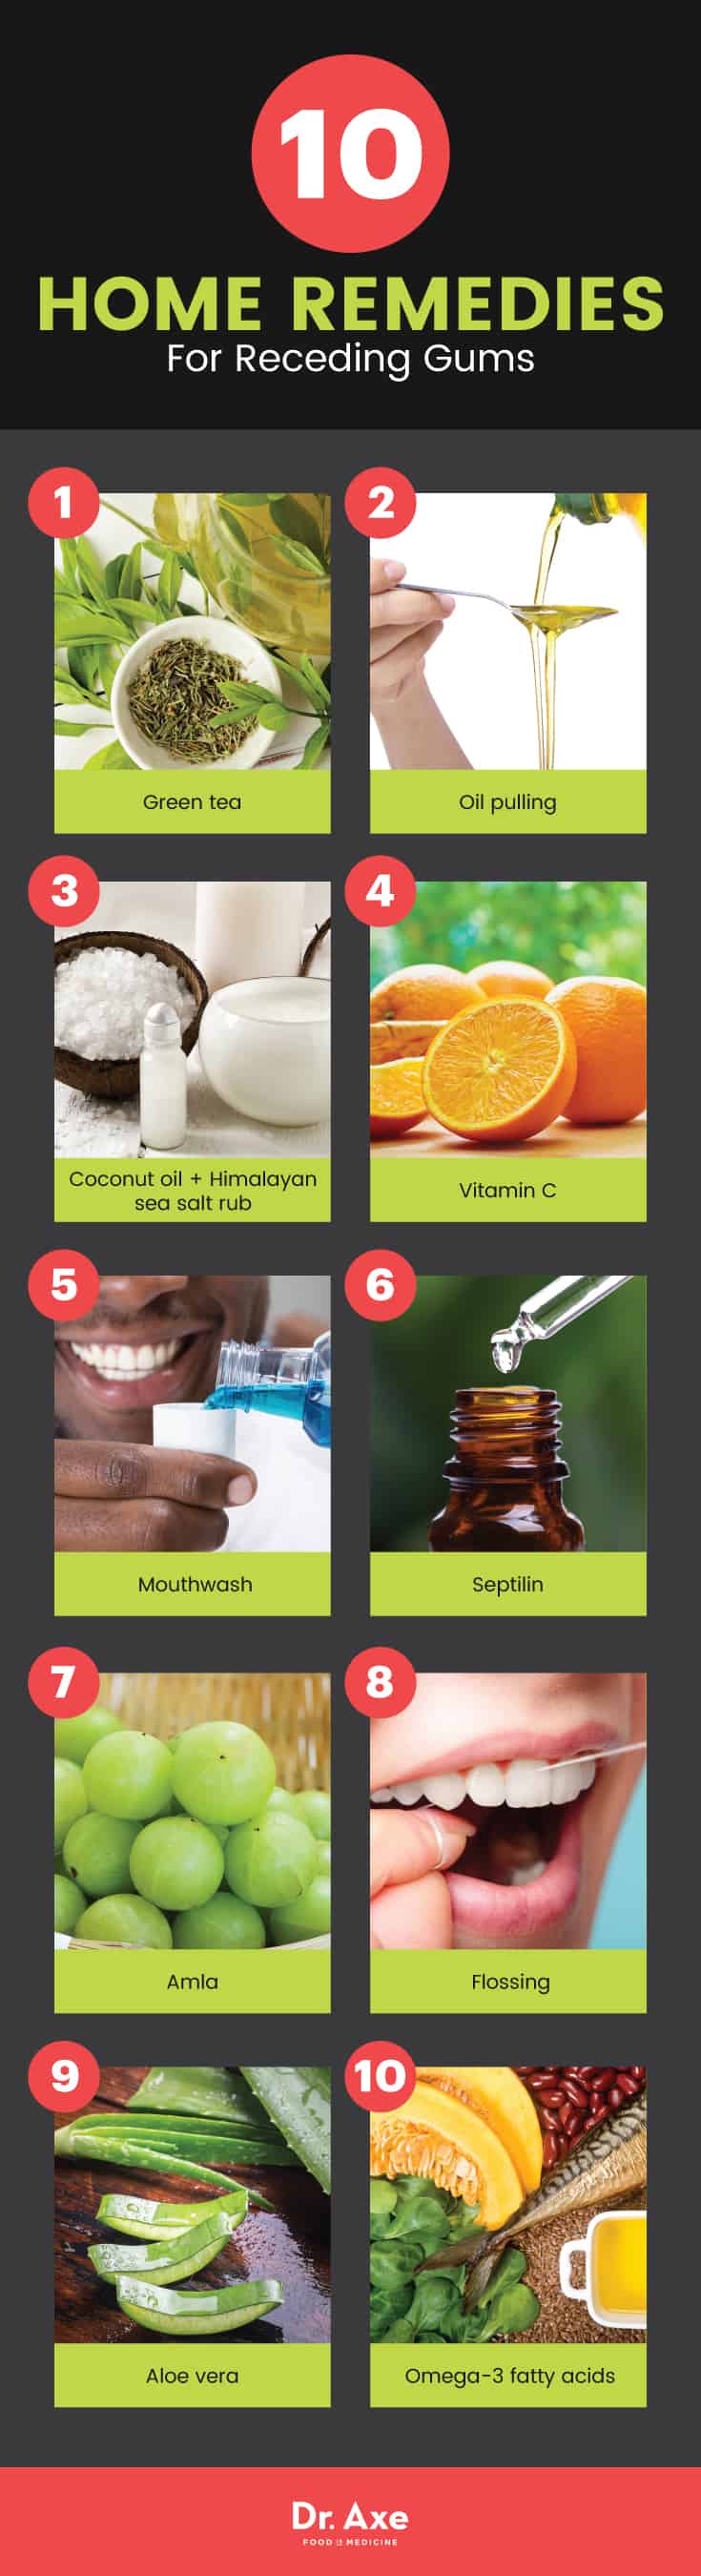 10 receding gums home remedies - Dr. Axe